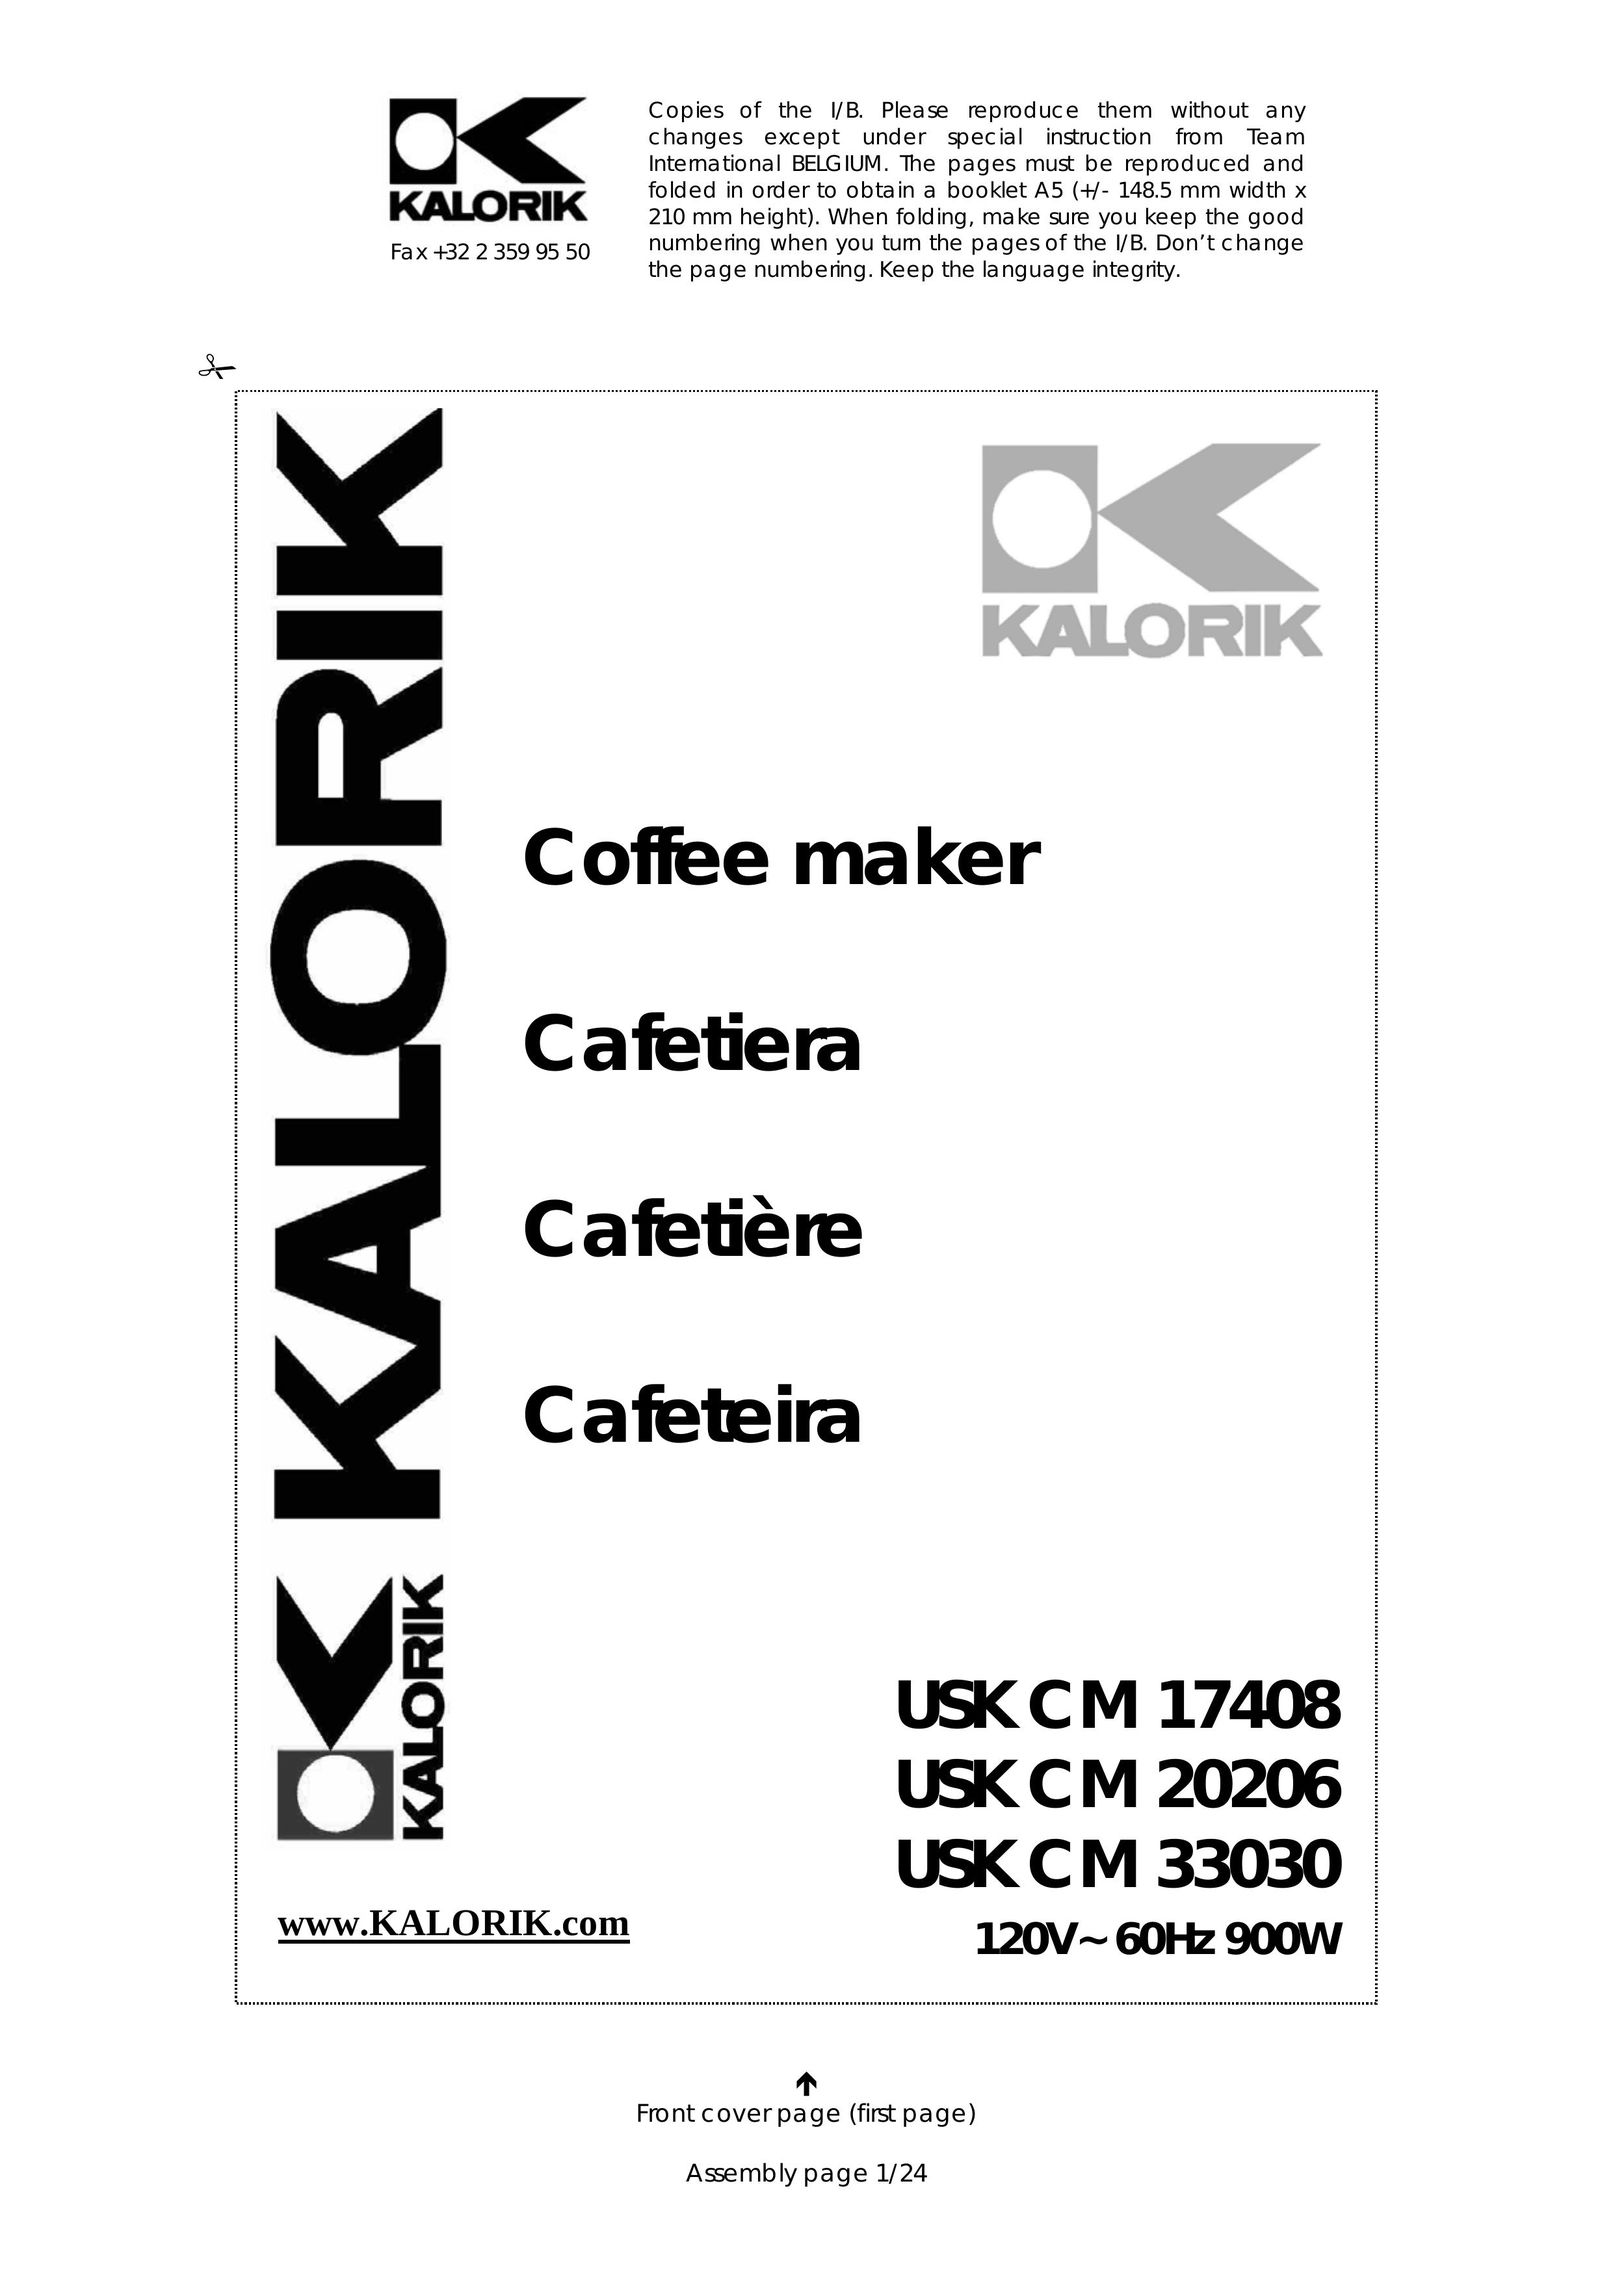 Kalorik USK CM 20206 Coffeemaker User Manual